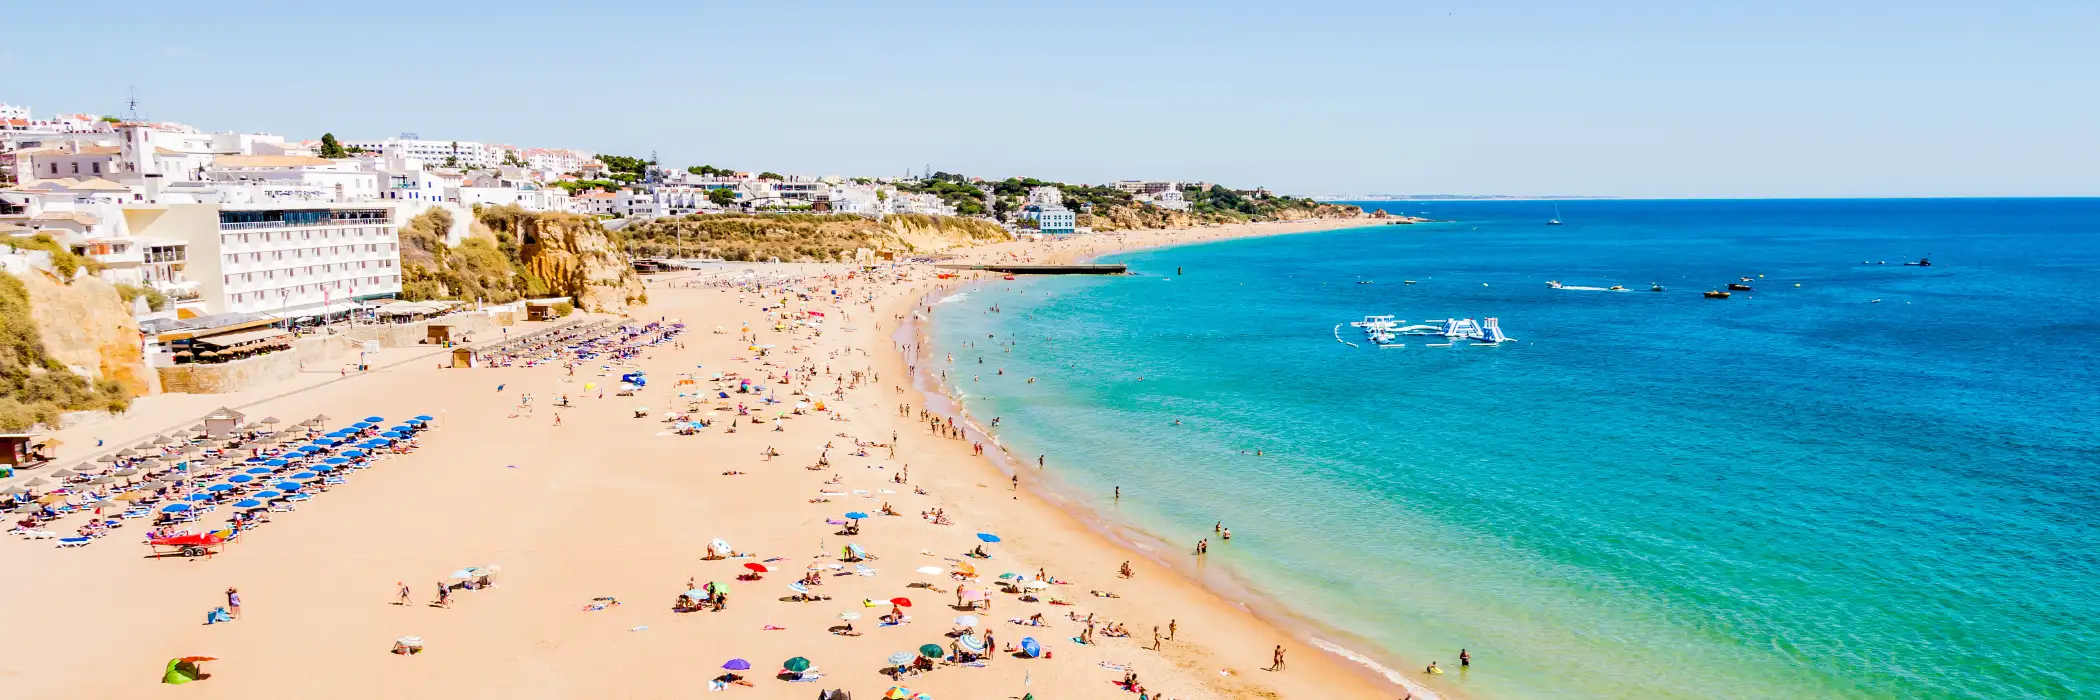 Algarve Holidays Under £200